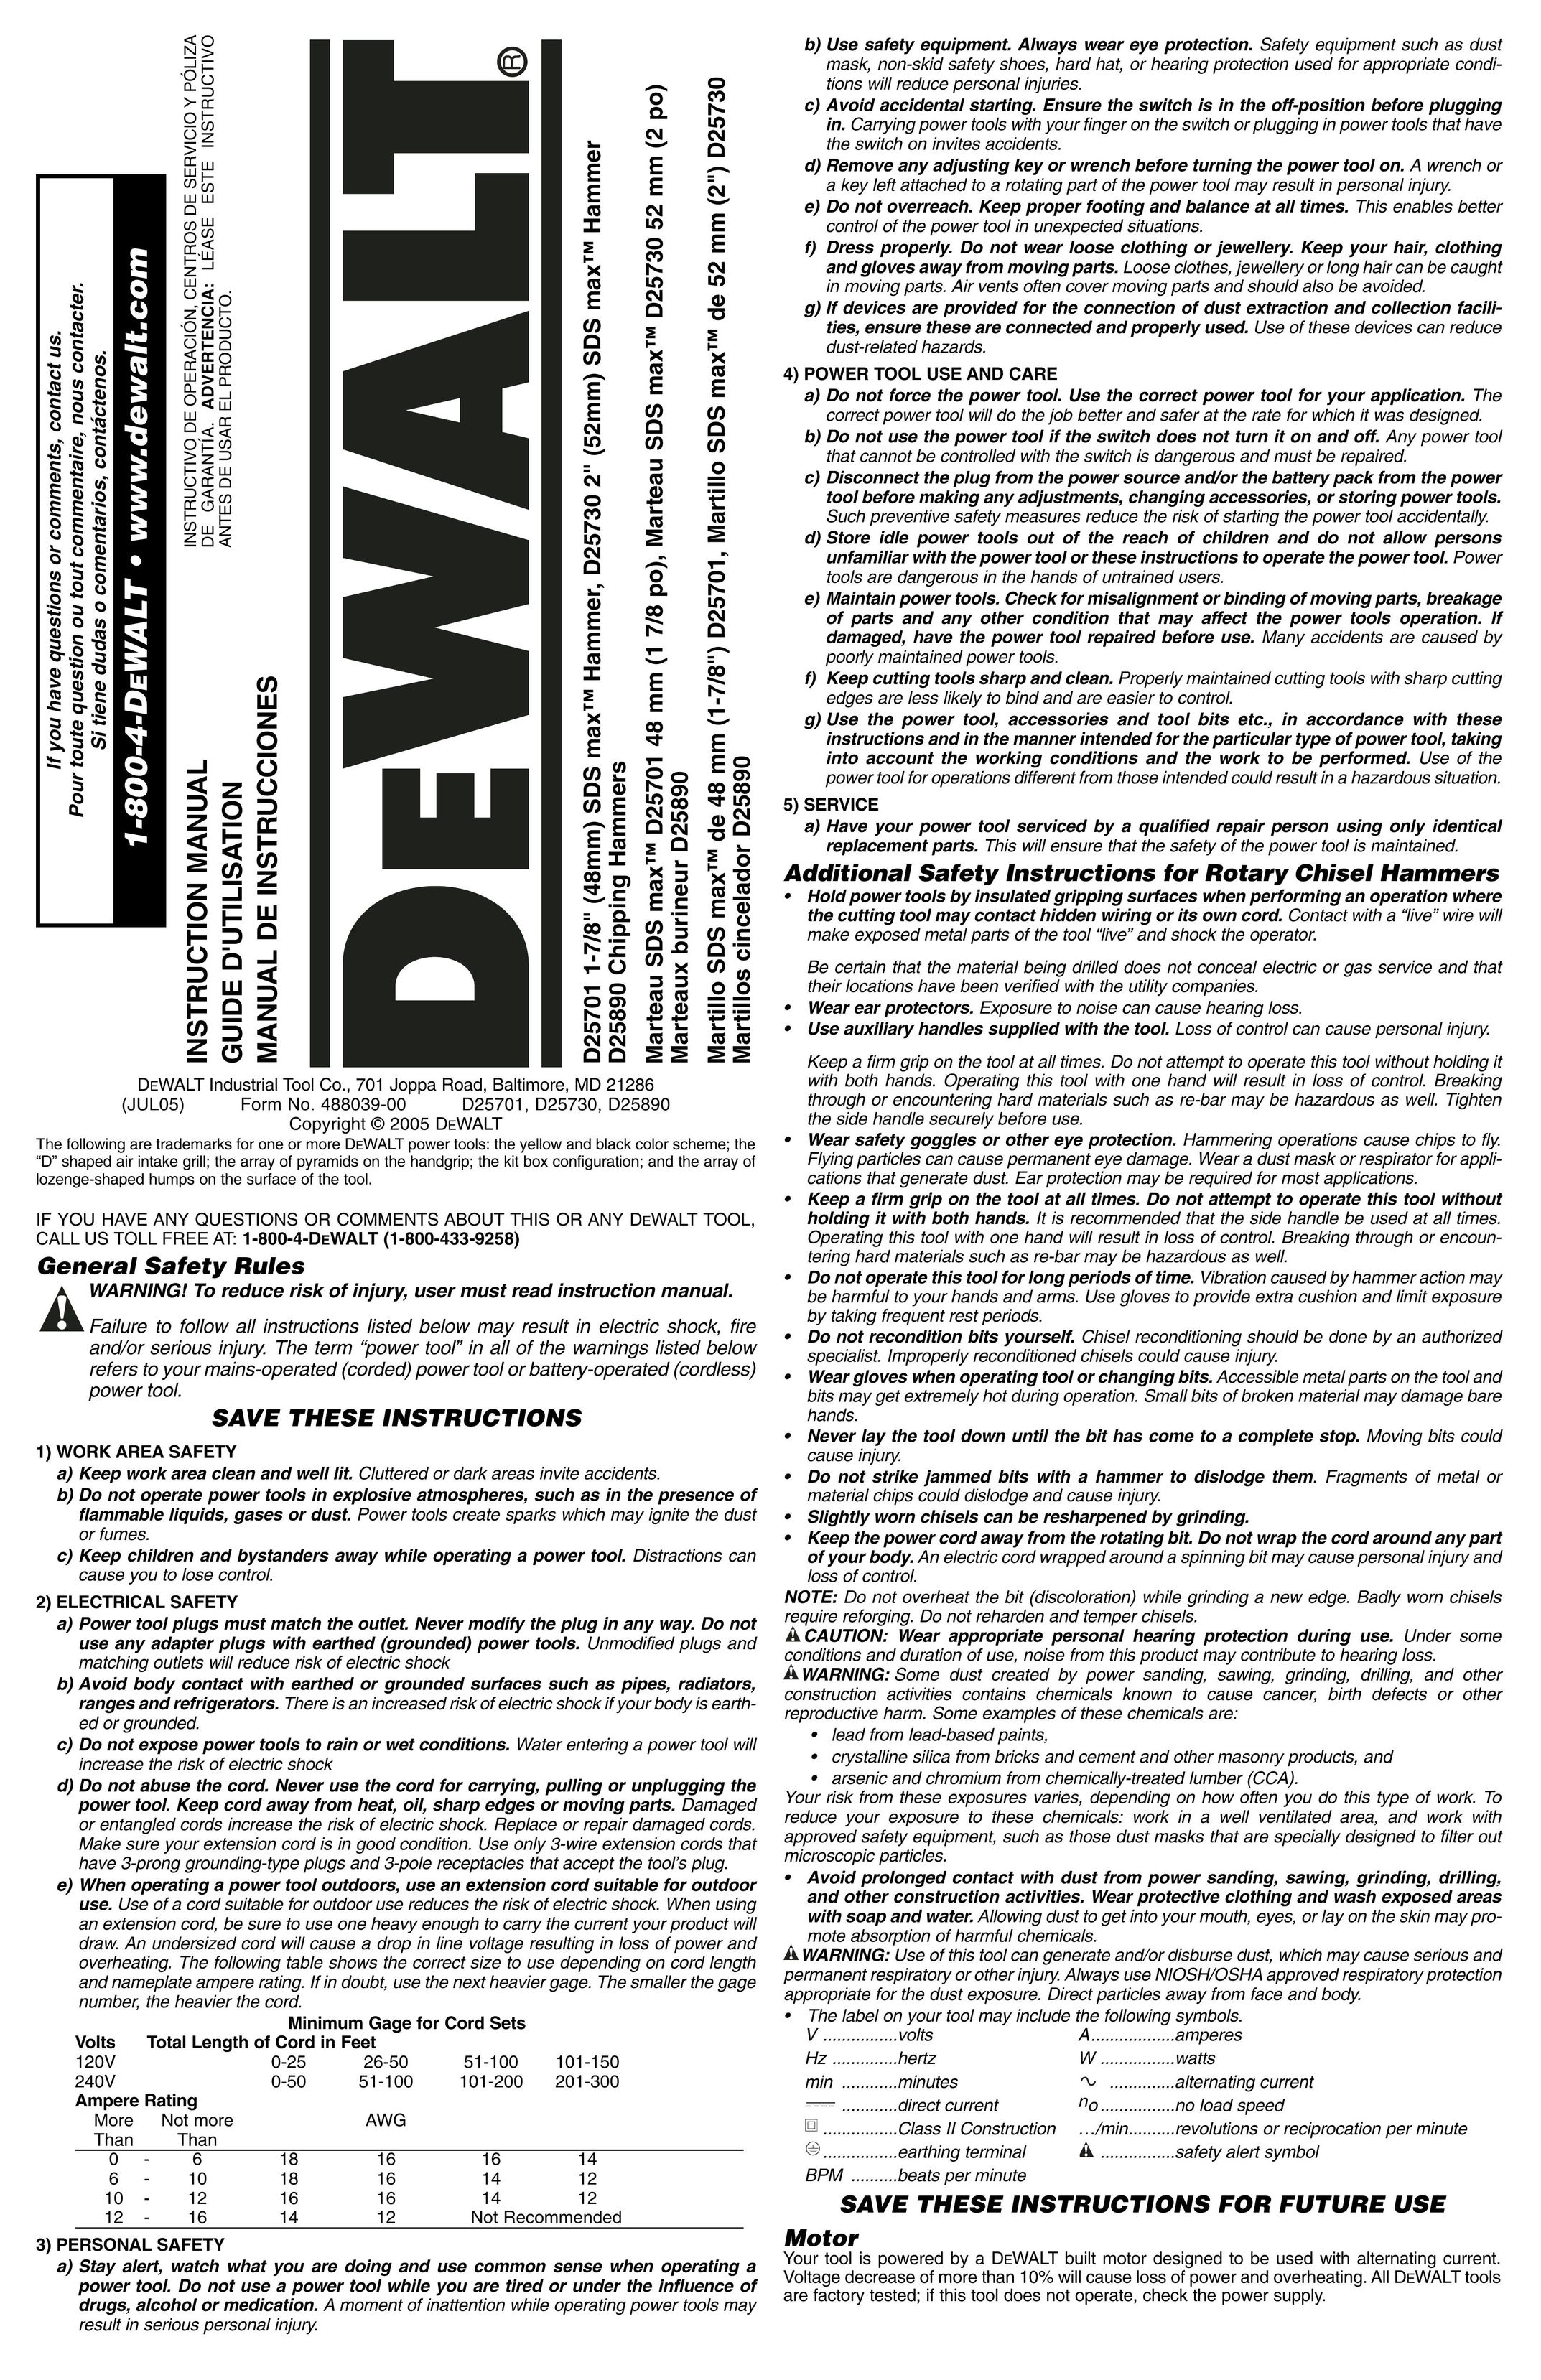 DeWalt D25890 Power Hammer User Manual